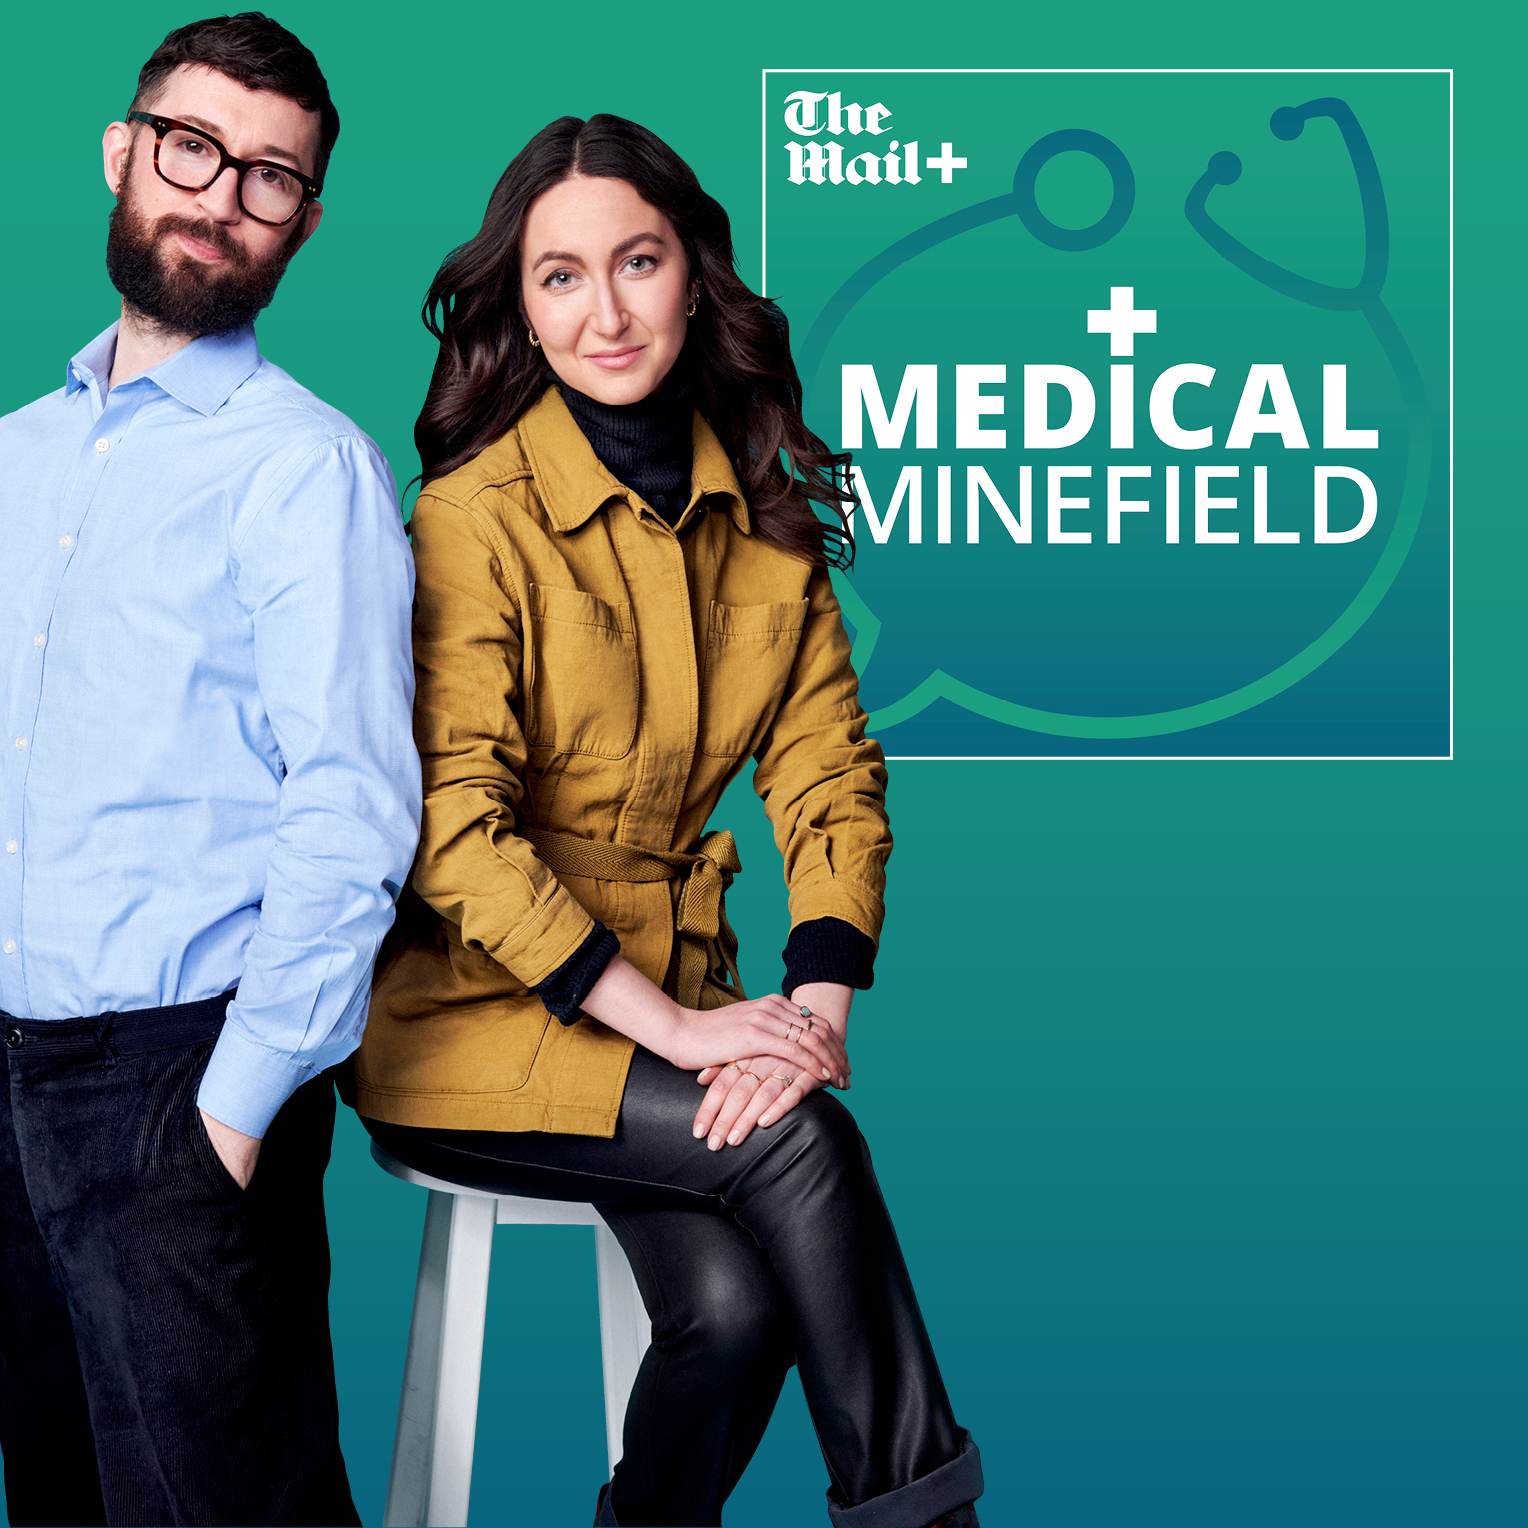 Medical Minefield